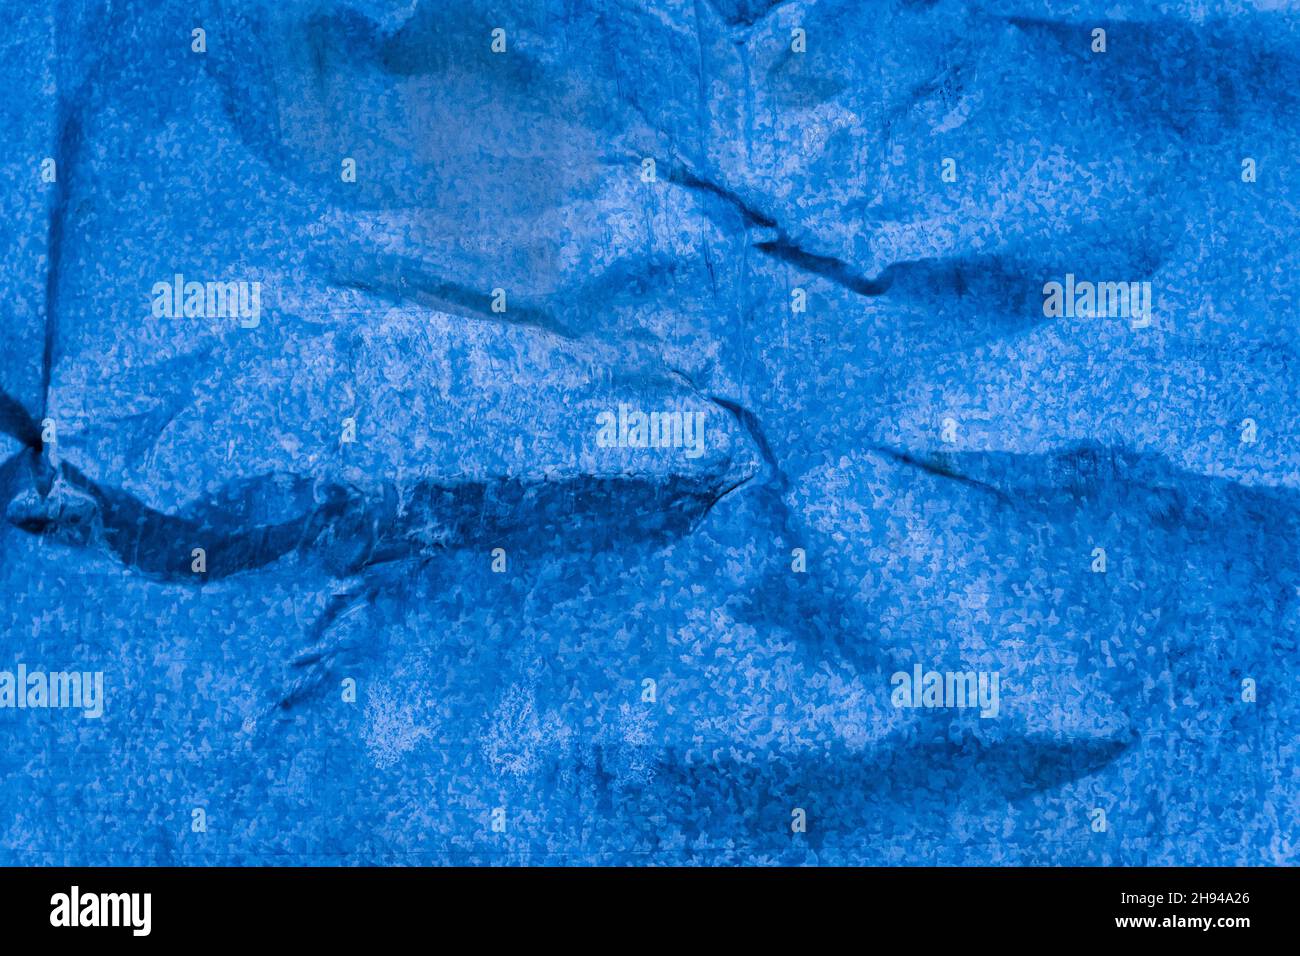 Dent on galvanized iron, dent on metal broken texture damaged background blue. Stock Photo